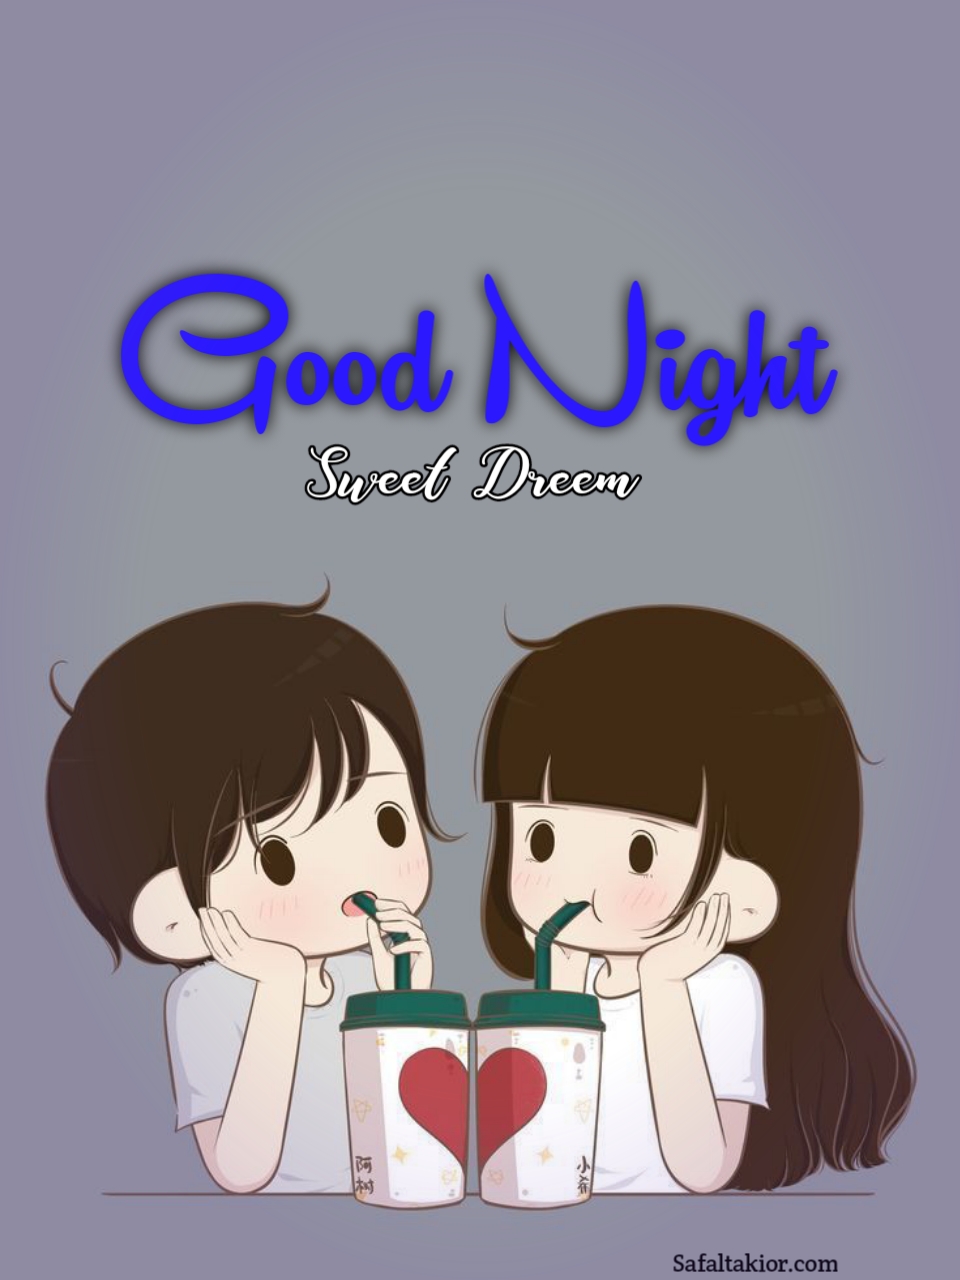 good night images download free